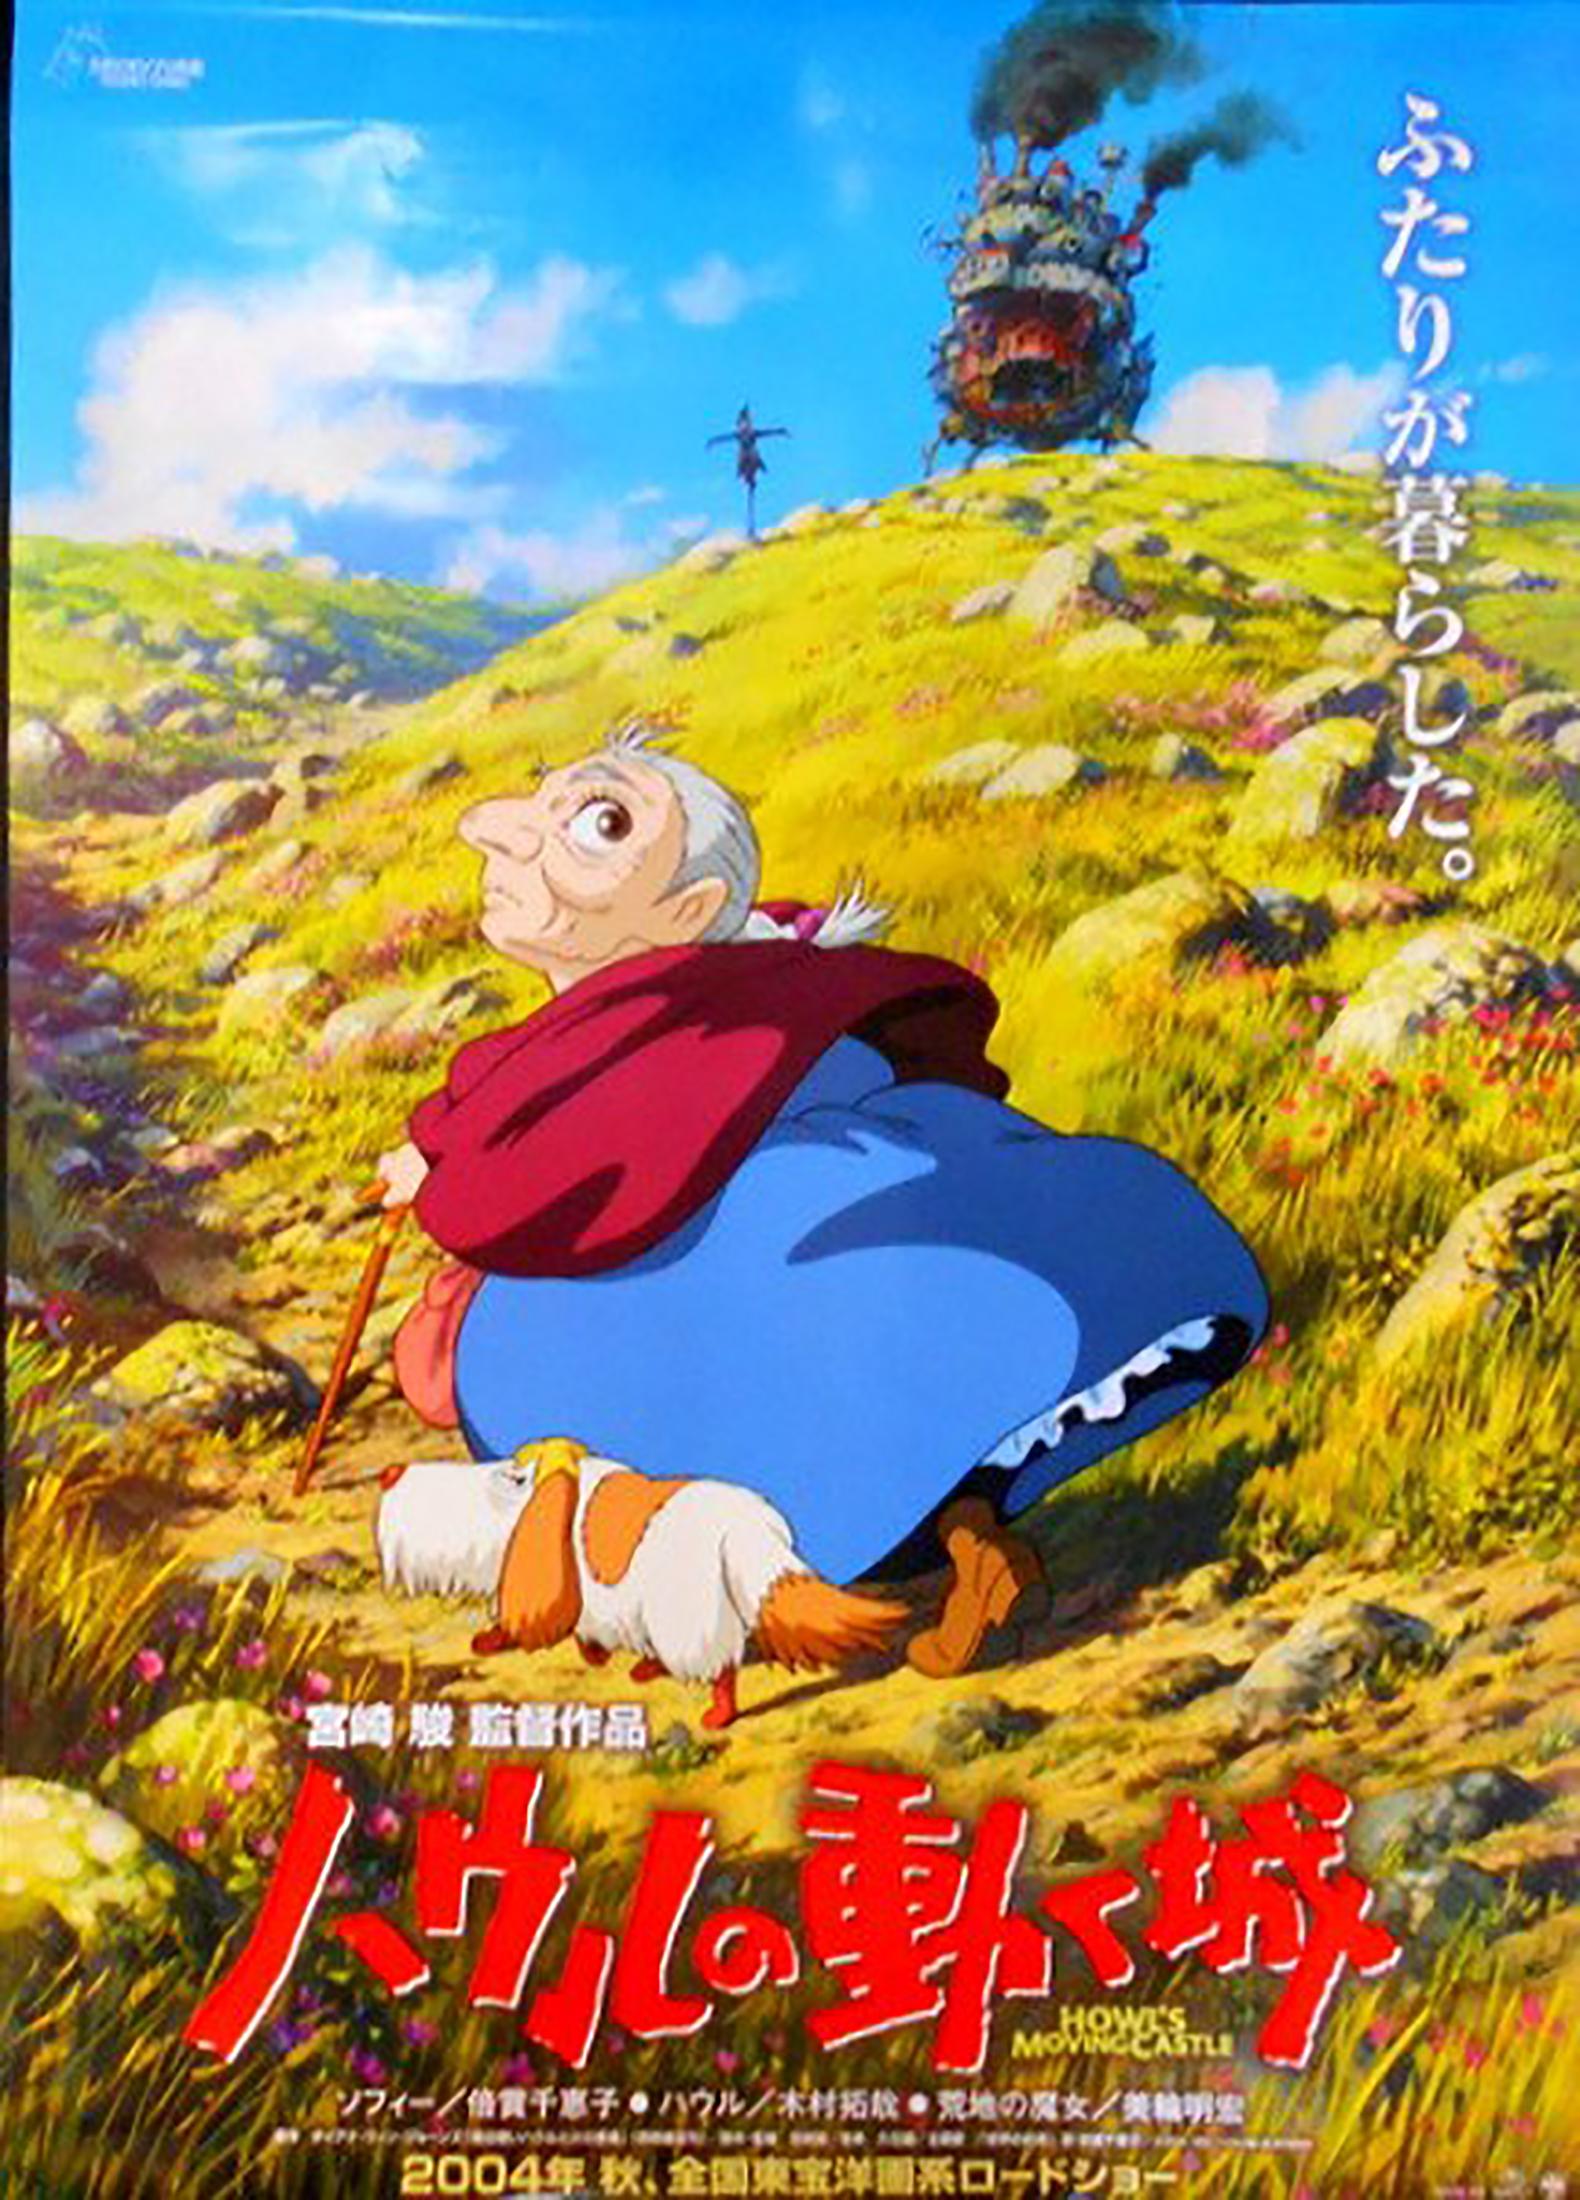 Howl's Moving Castle Original Large Vintage Poster, Miyazaki, Studio Ghibli - Print by Unknown